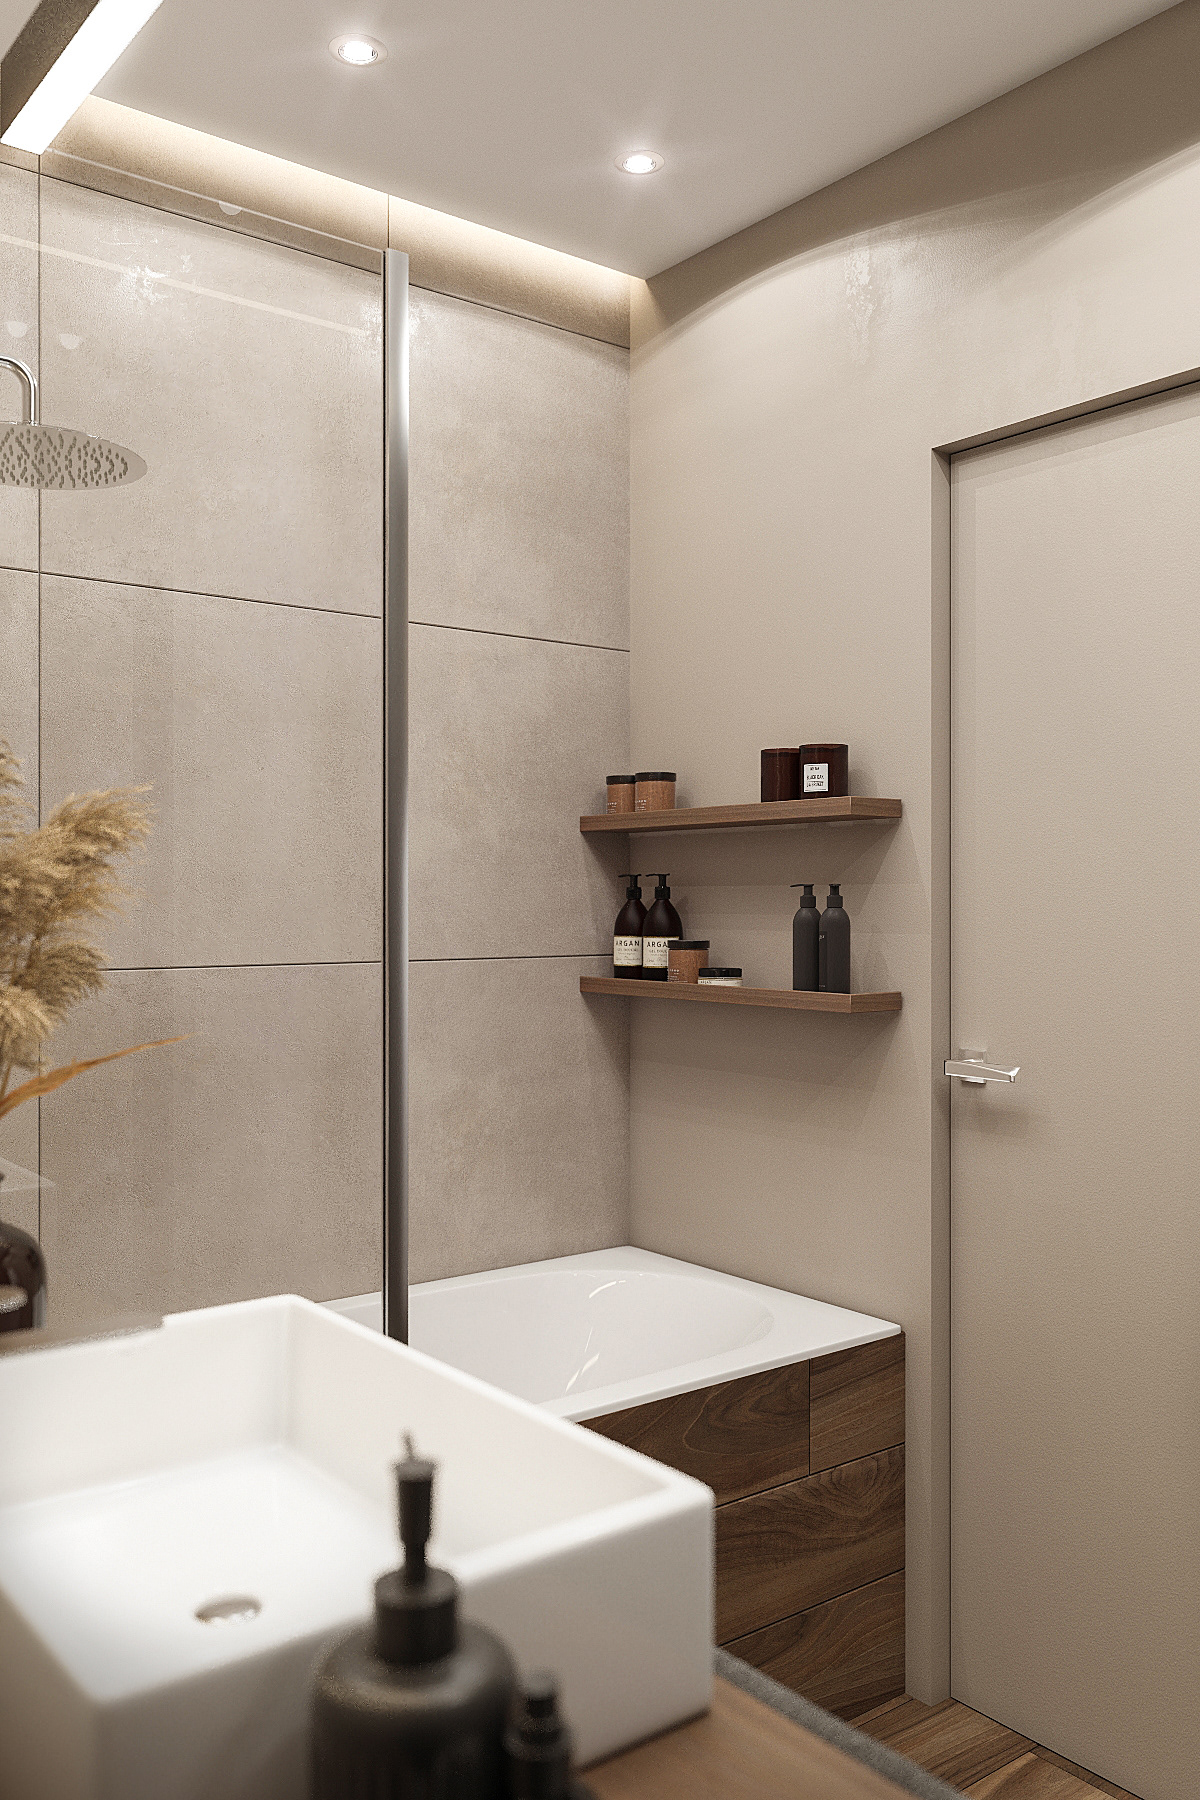 3dmax bathroom design home Interior interiordesign visualization ванная визуализация дизайн